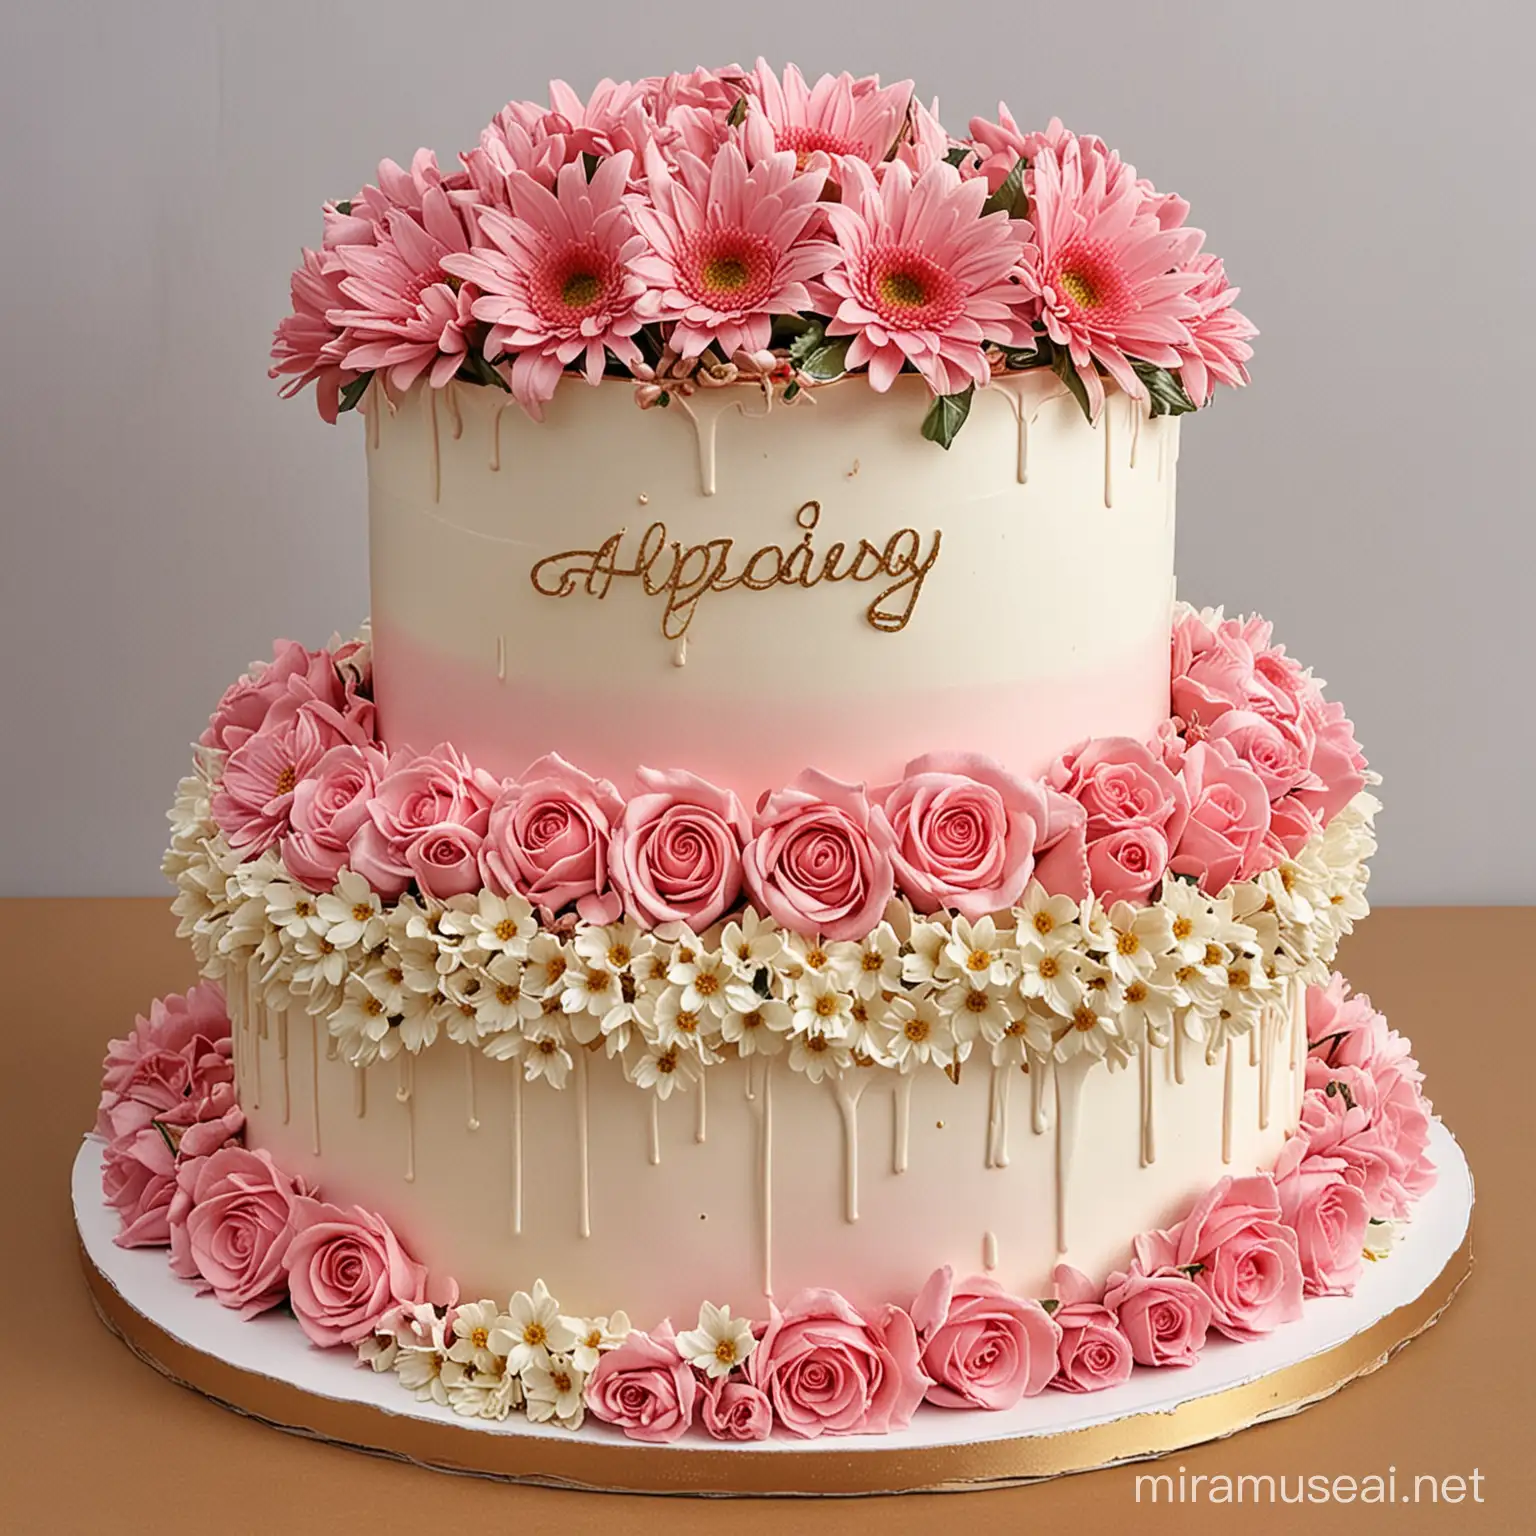 Amazing birthday big cake and amazing flowers for woman